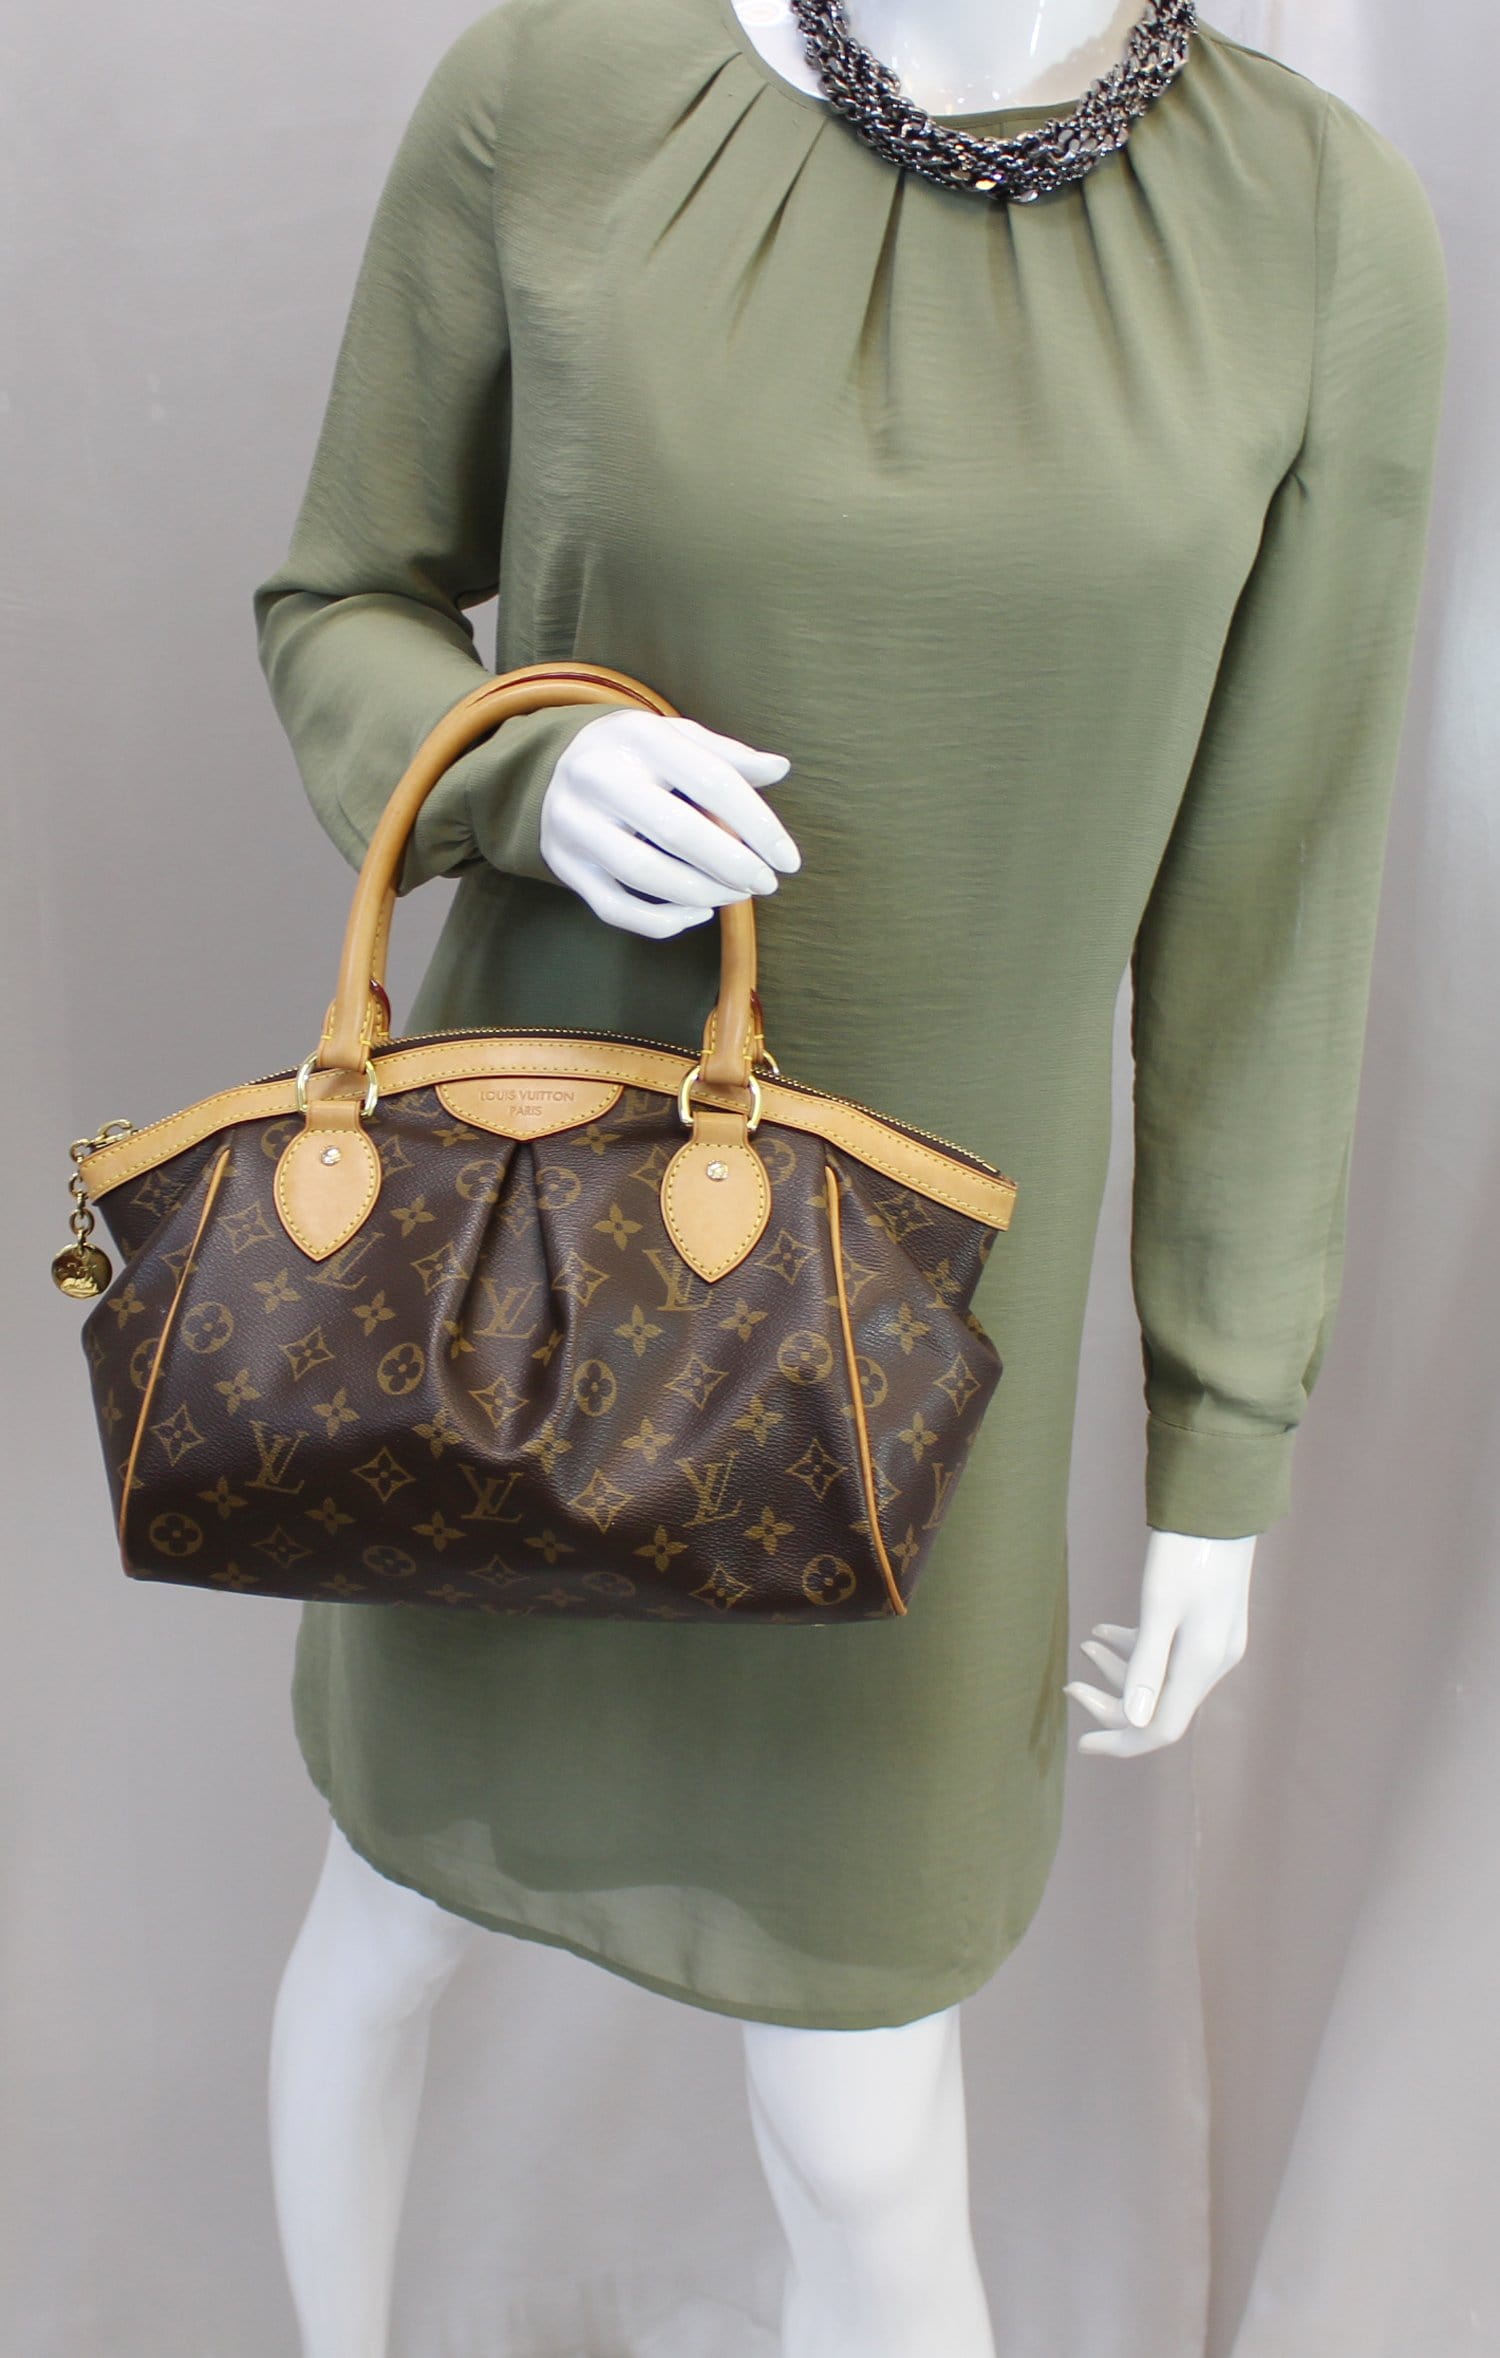 Louis Vuitton Tivoli PM Canvas Shoulder Handbag - Lv Tivoli